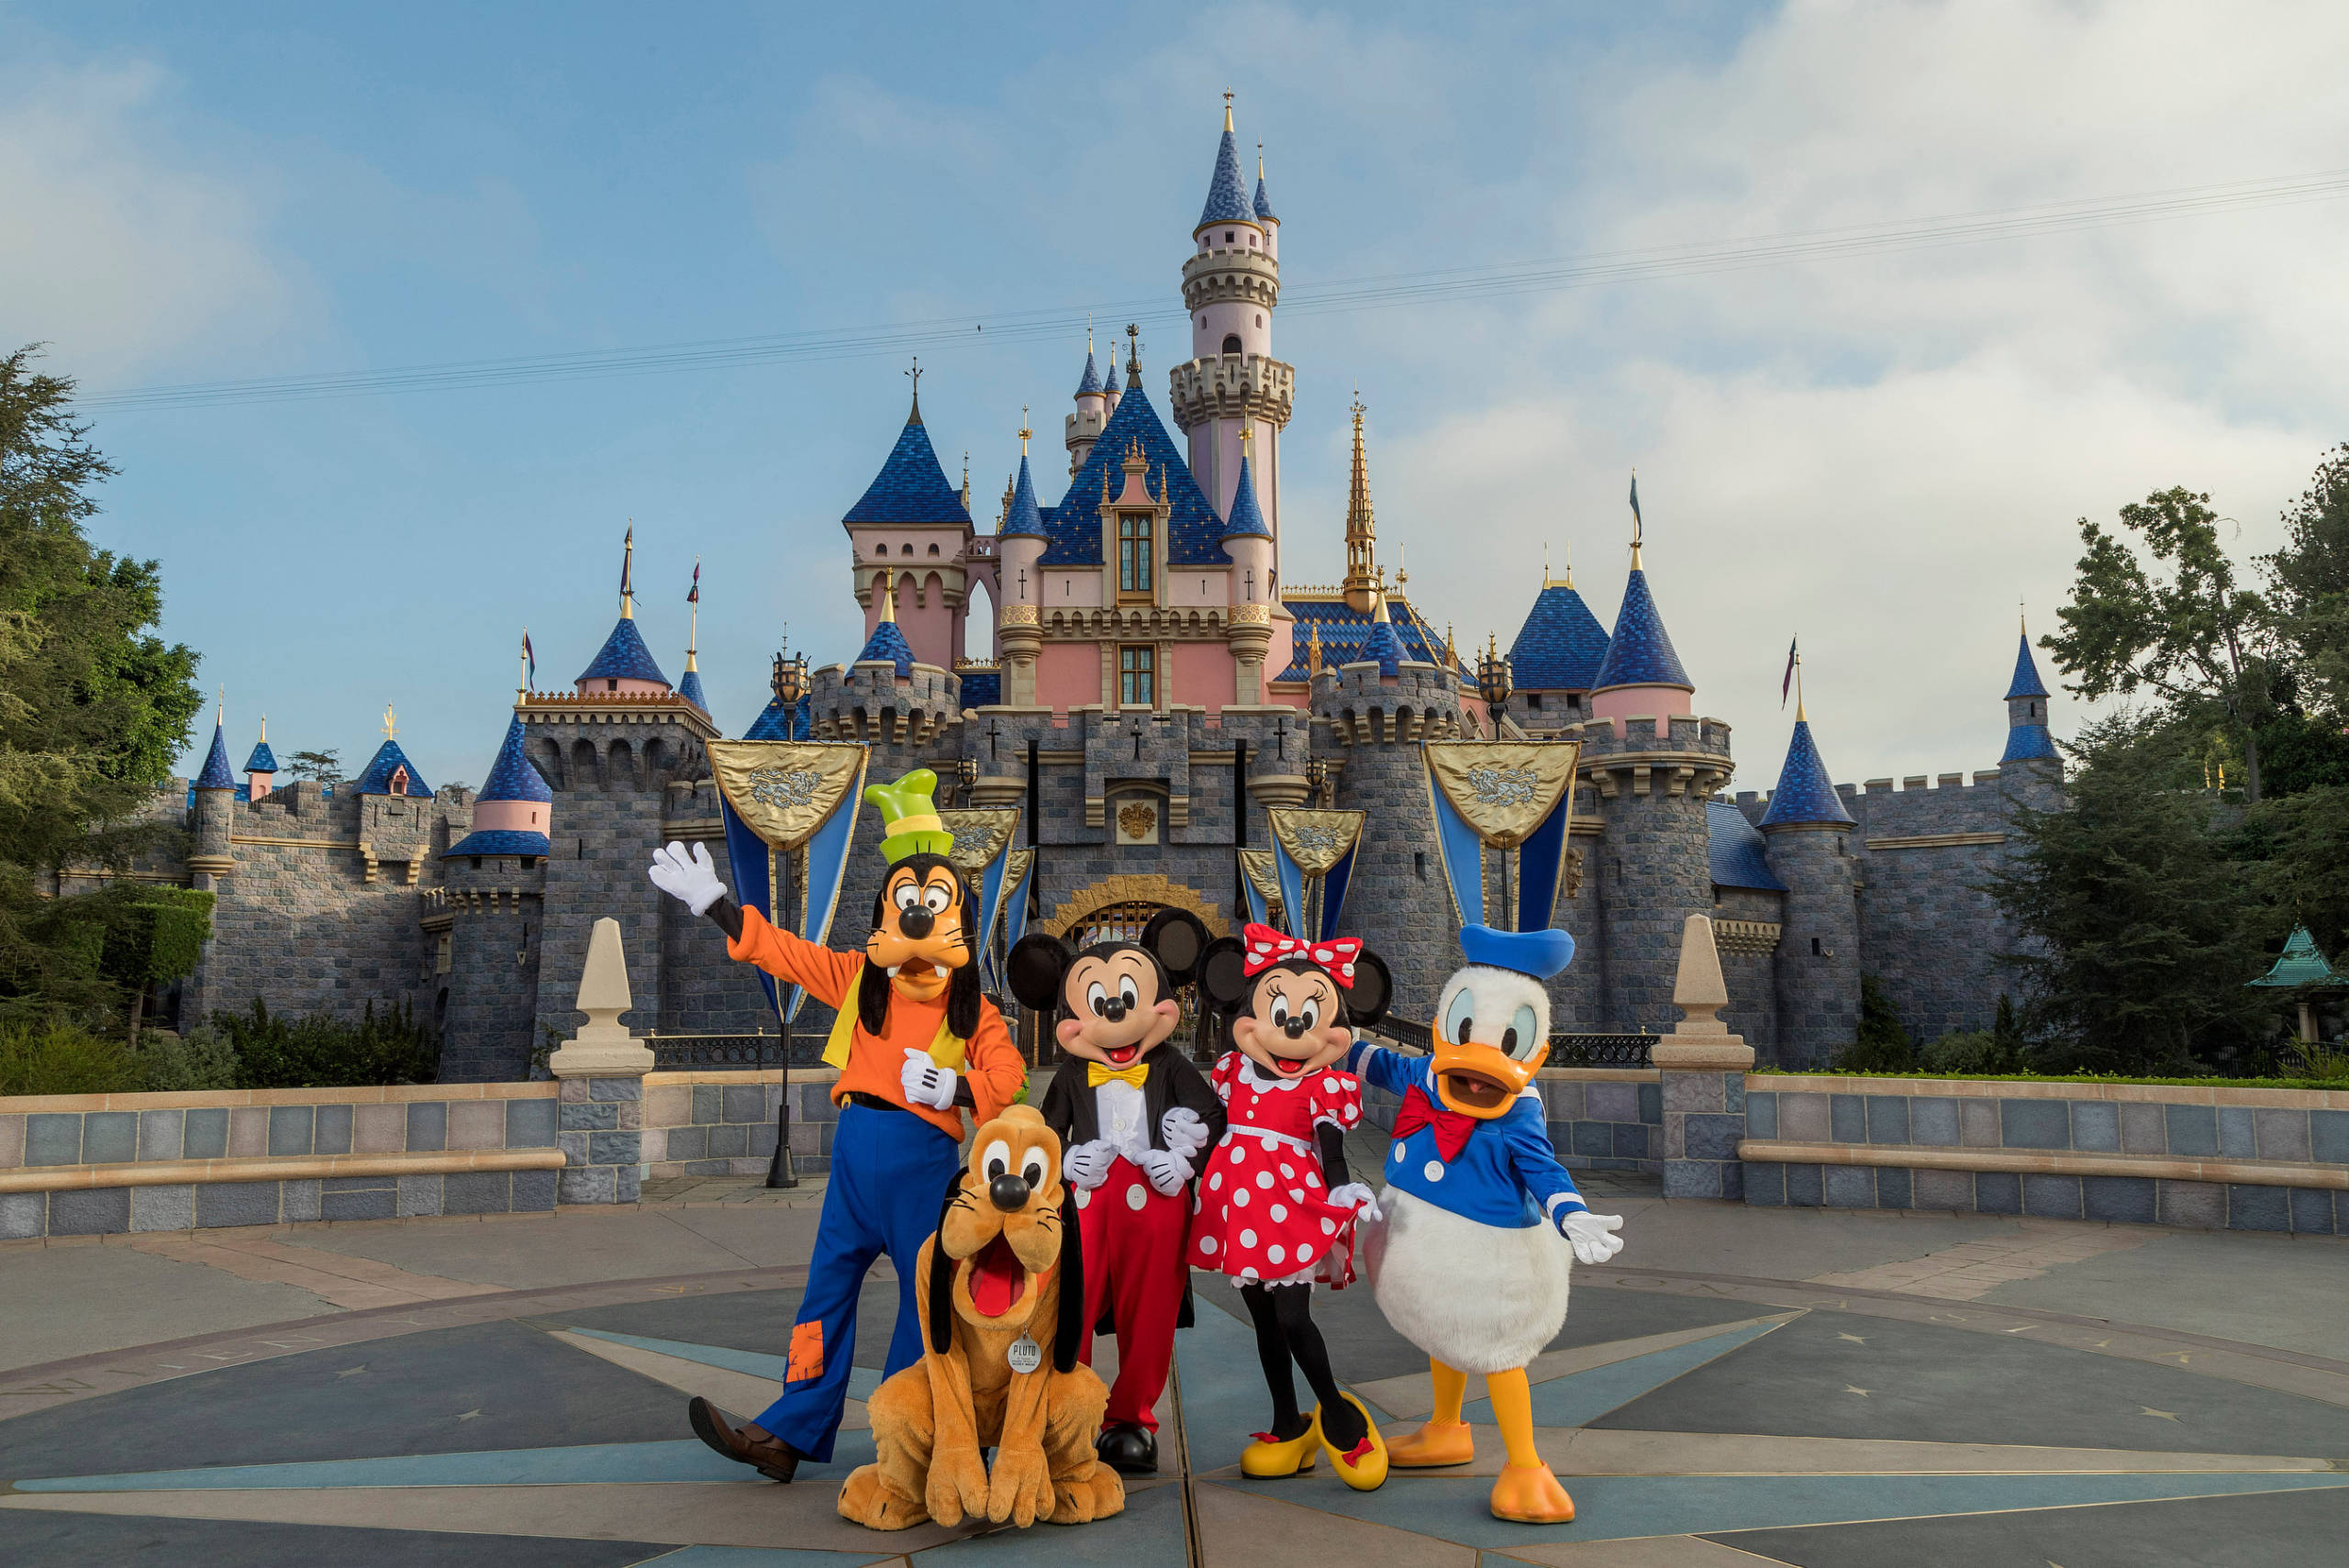 Disneyland Sleeping Beauty Castle in California